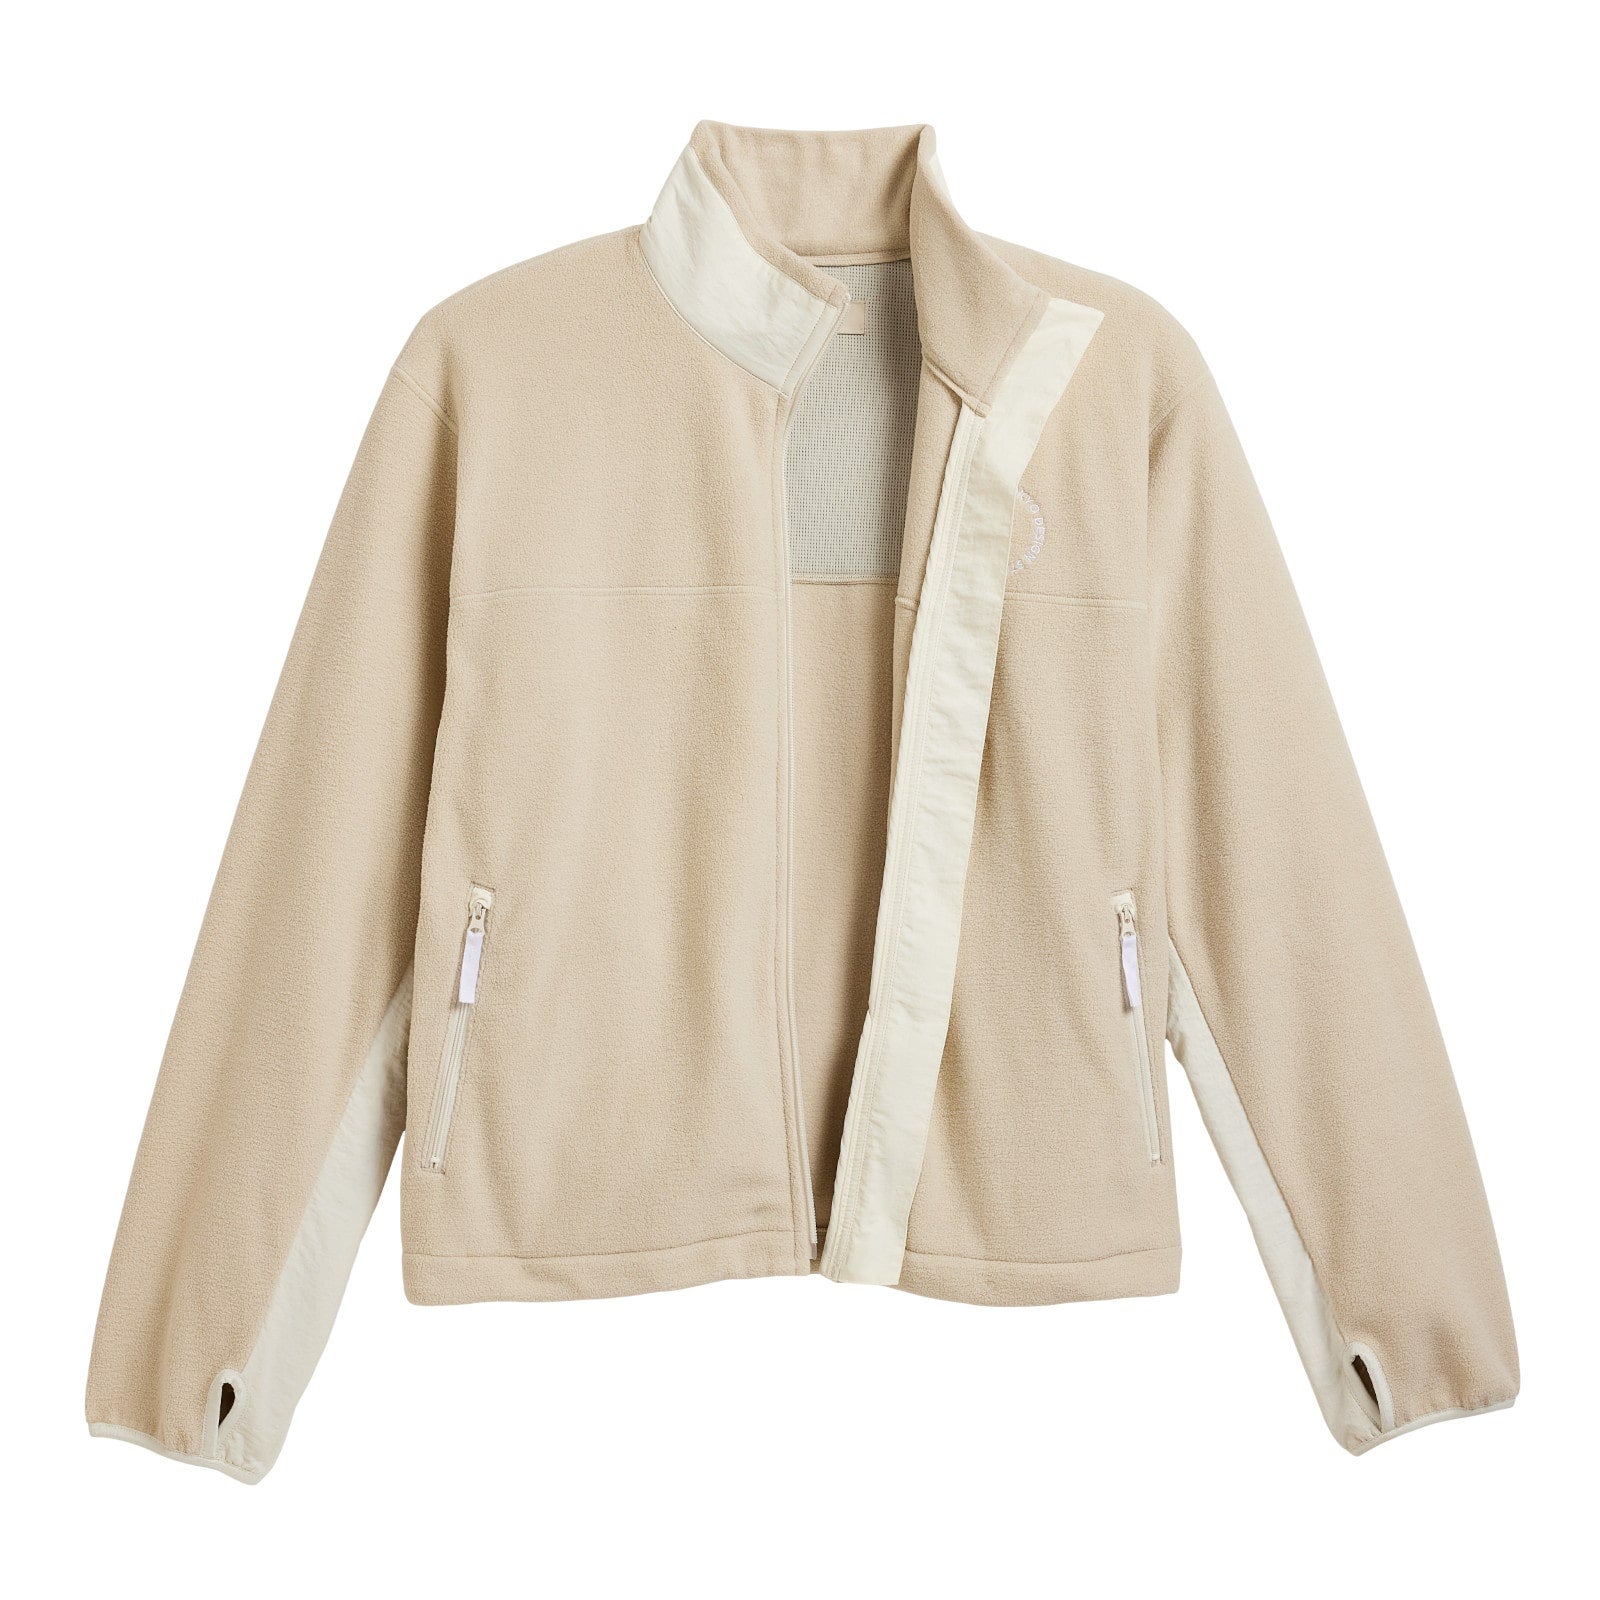 TOKYO DESIGN STUDIO New Balance Fleece Jacket